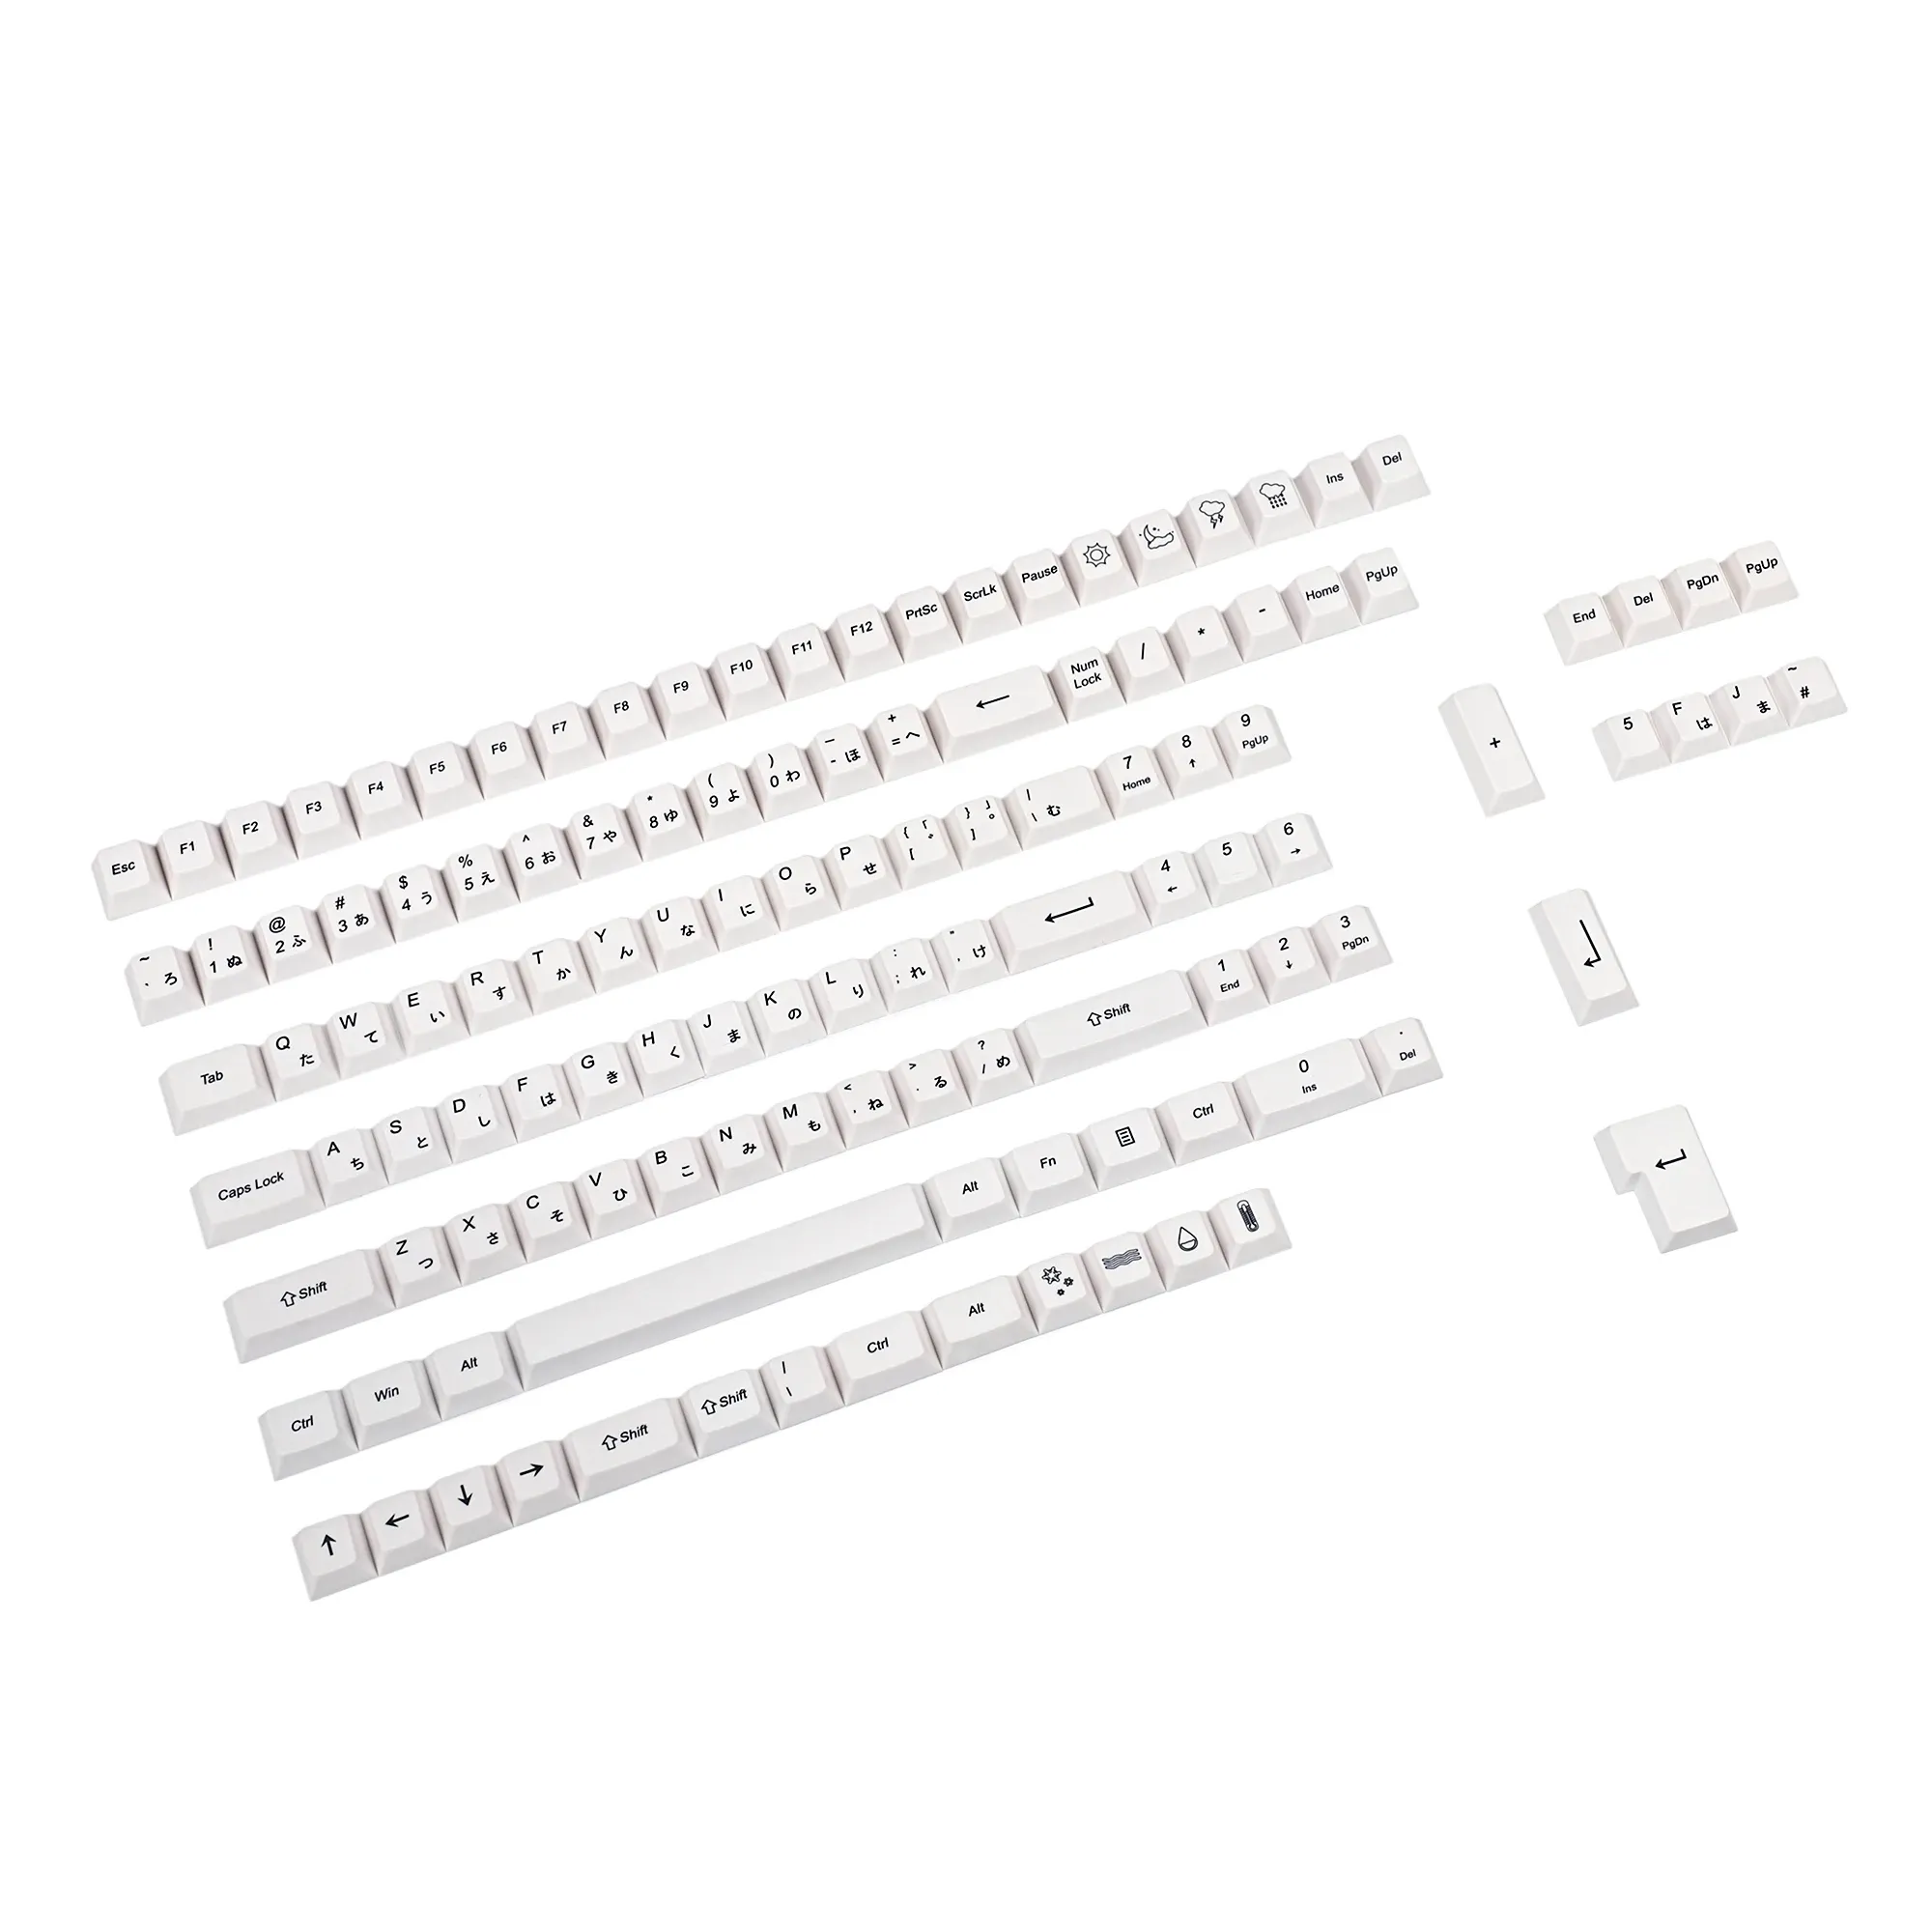 Accessories YMDK Cherry Profile Minimalist Style Dye Sub Japanese PBT White Keycaps For ANSI ISO 104 TKL 60% 96 84 MX Switches Keyboard